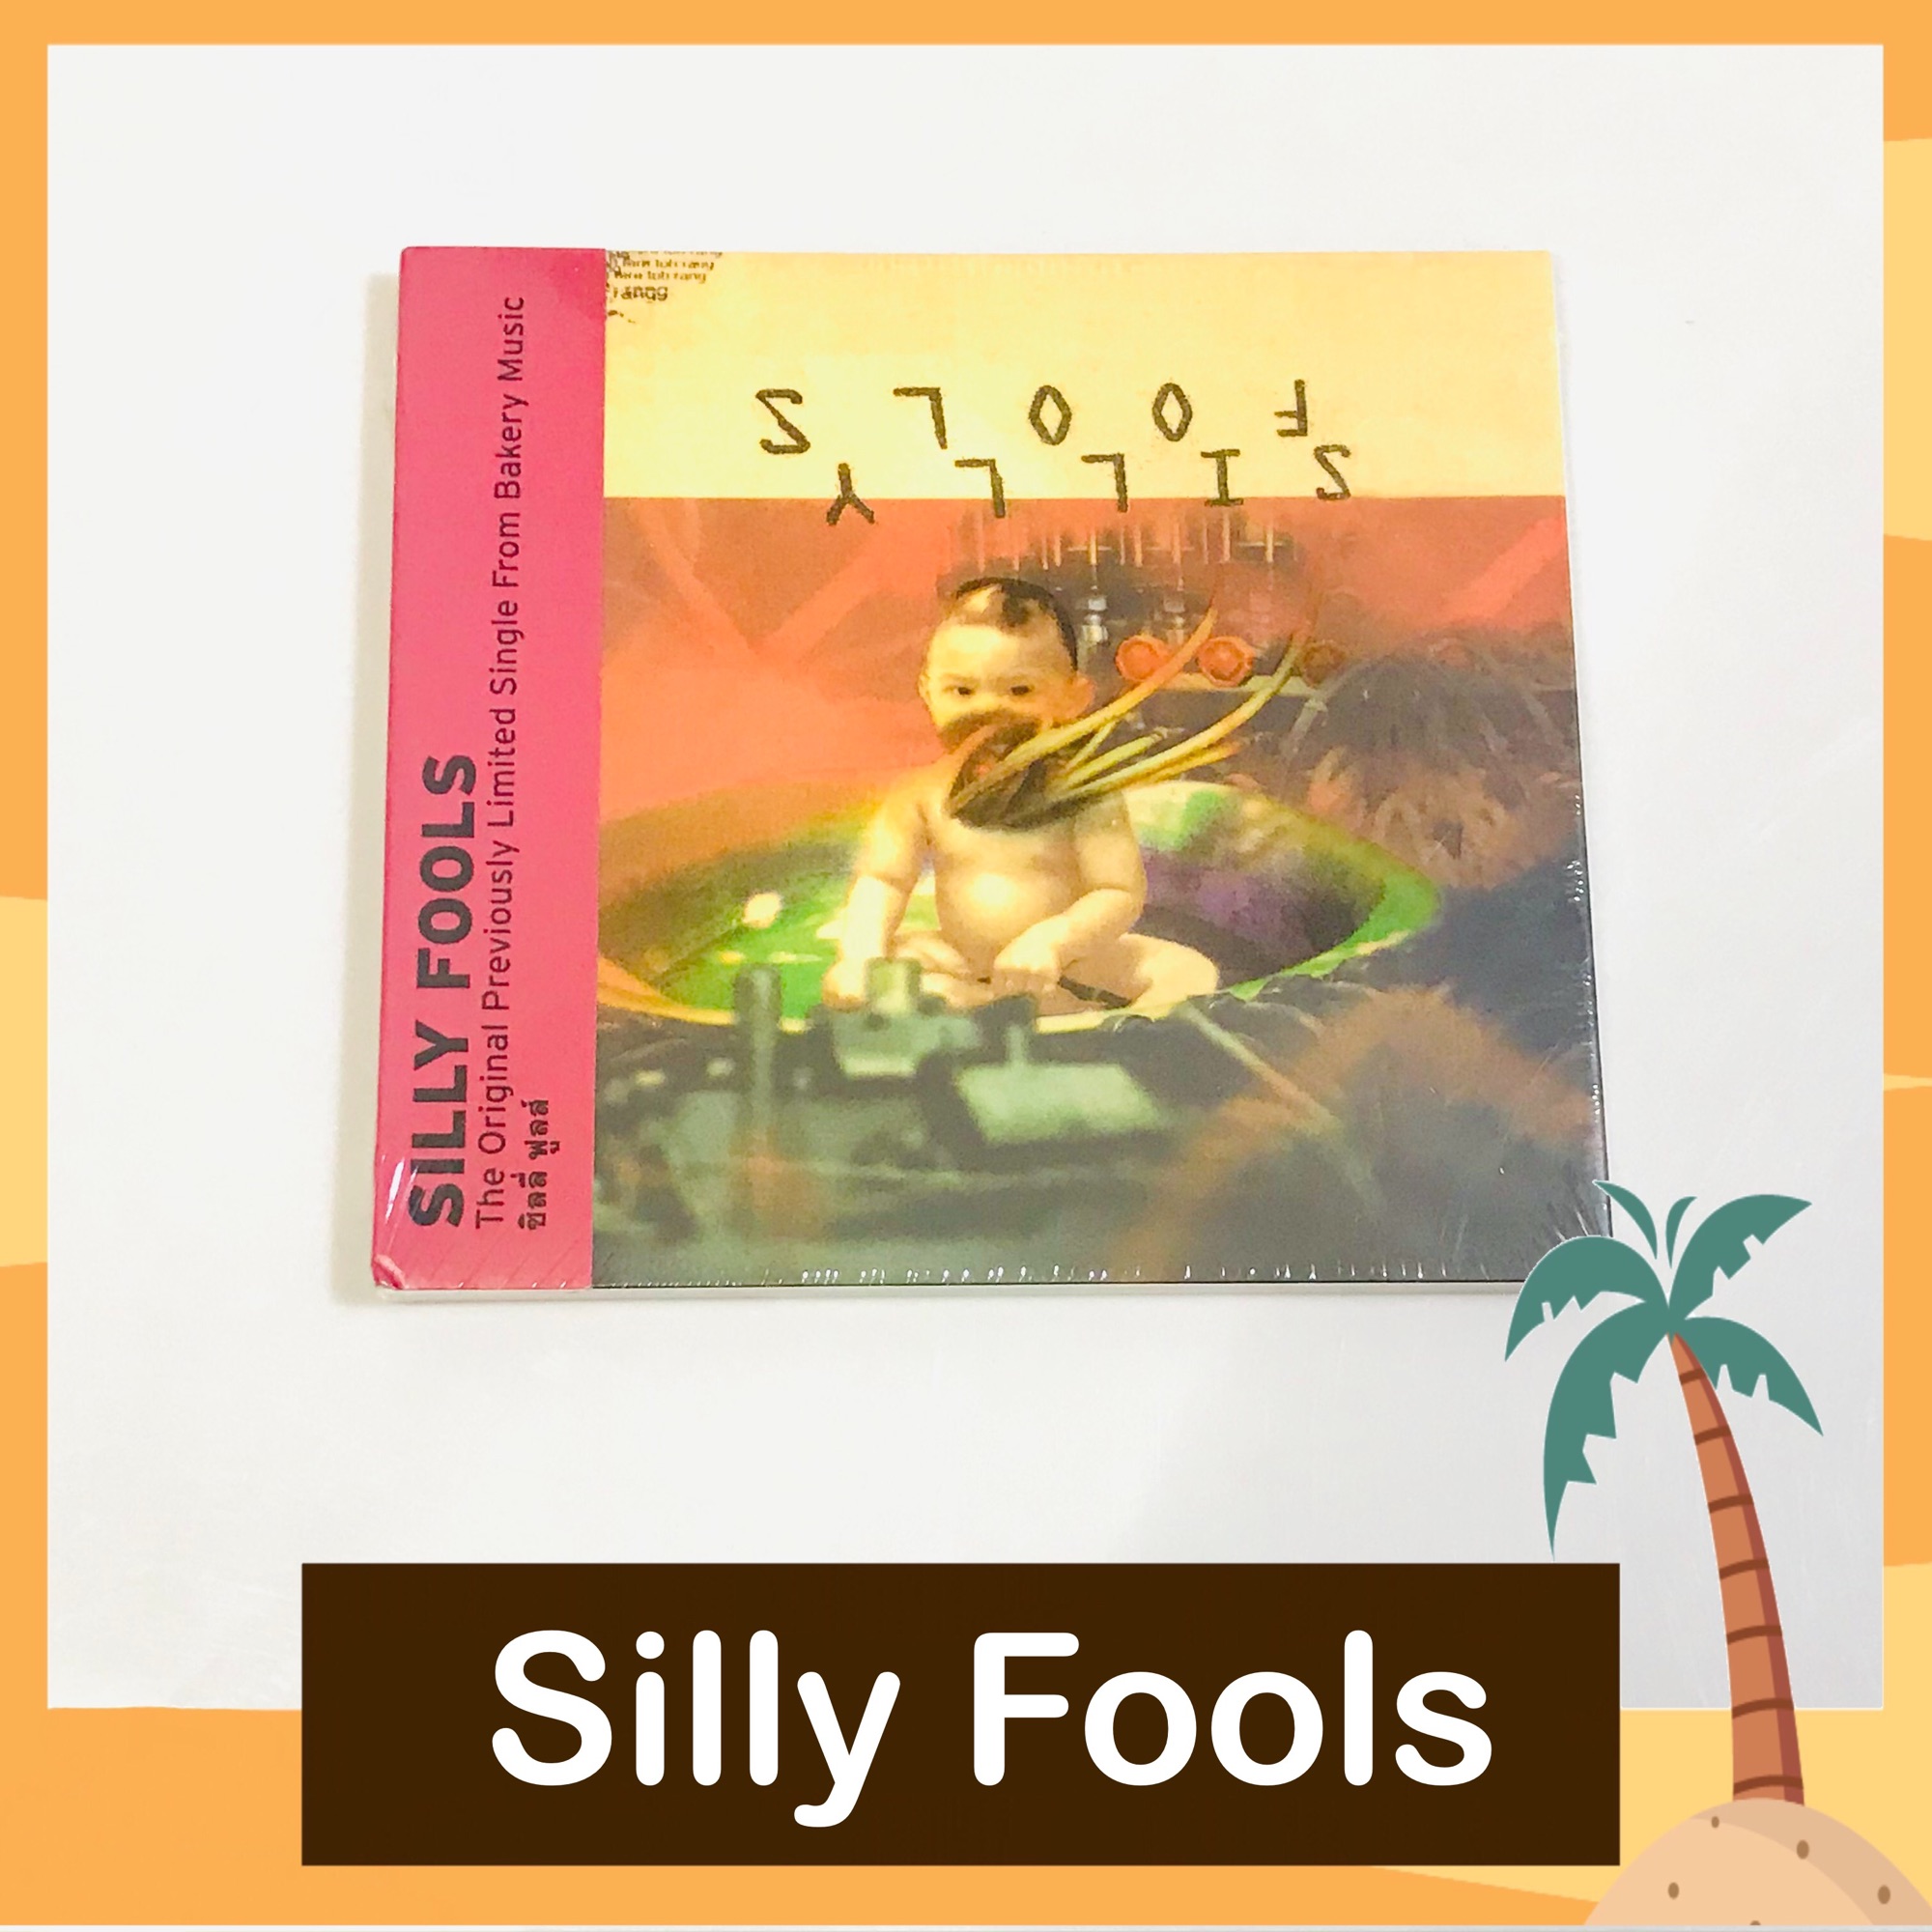 CD Silly Fools ซิลลี่ ฟูลส์ อัลบั้ม The Original Previous Limited Single มือ 1 Remaster